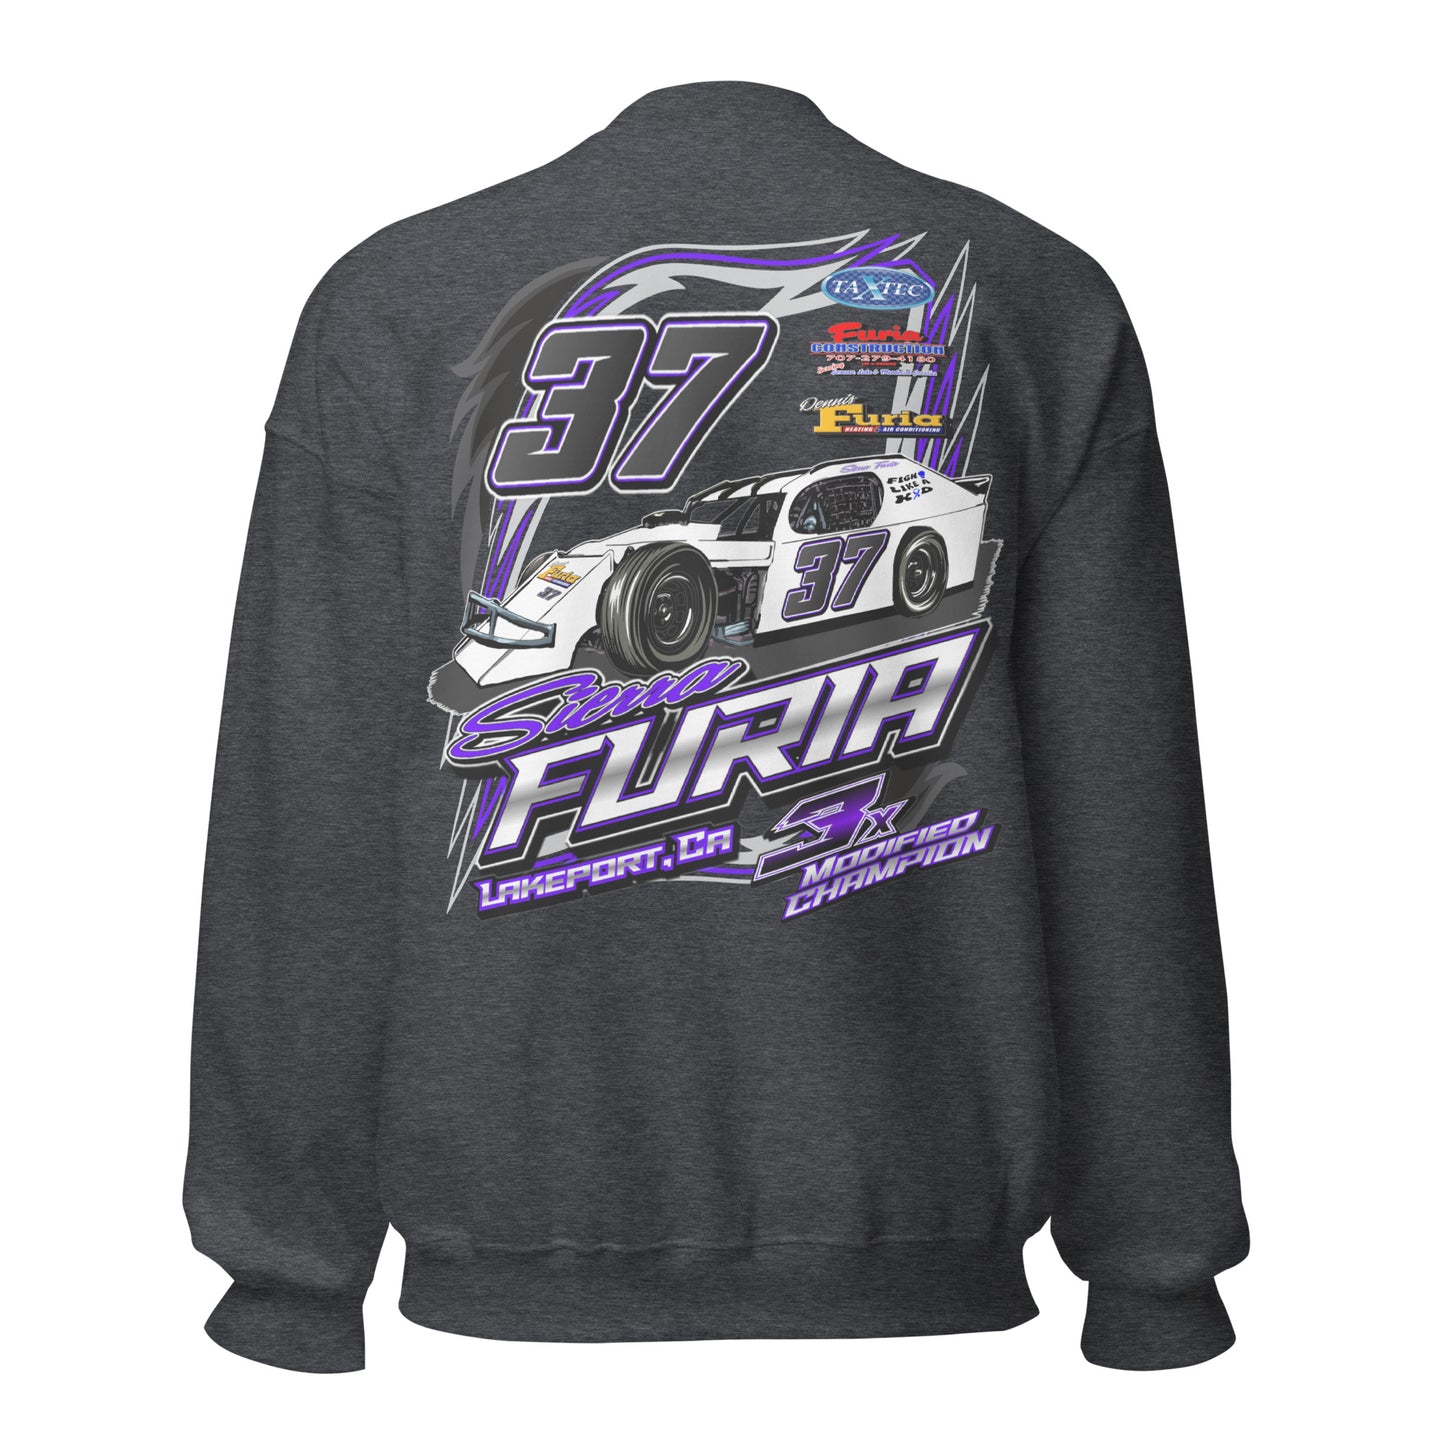 Sierra Furia Adult Crew Sweatshirt